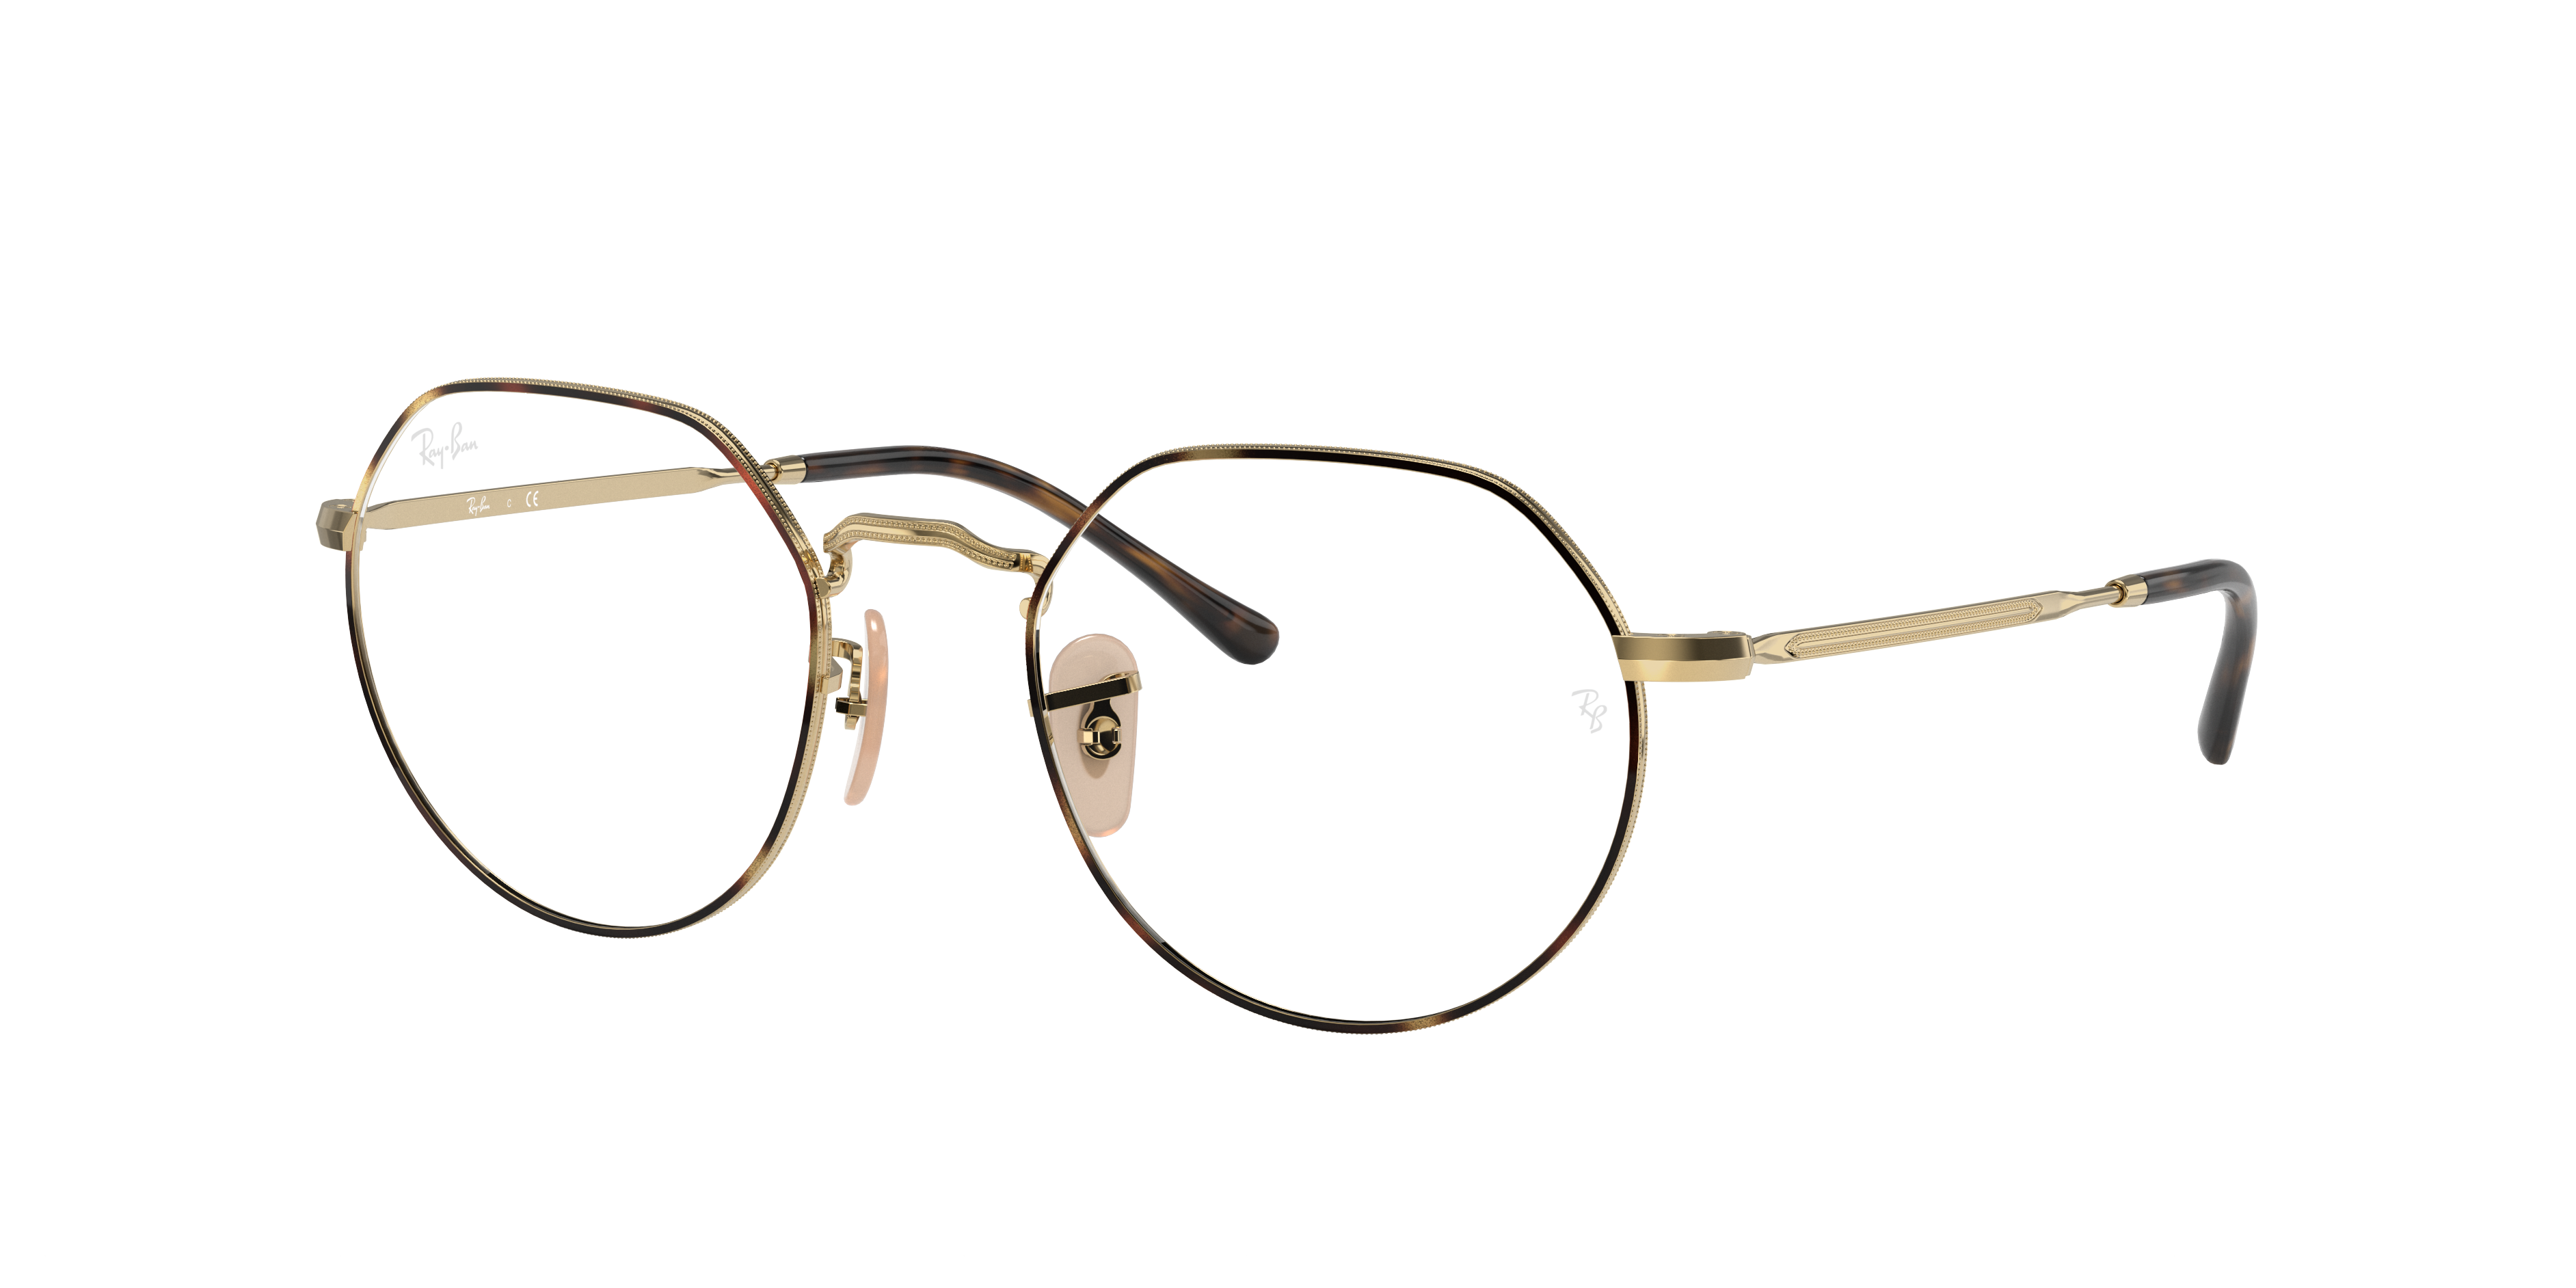 Jack Optics Eyeglasses with Havana On Gold Frame | Ray-Ban®